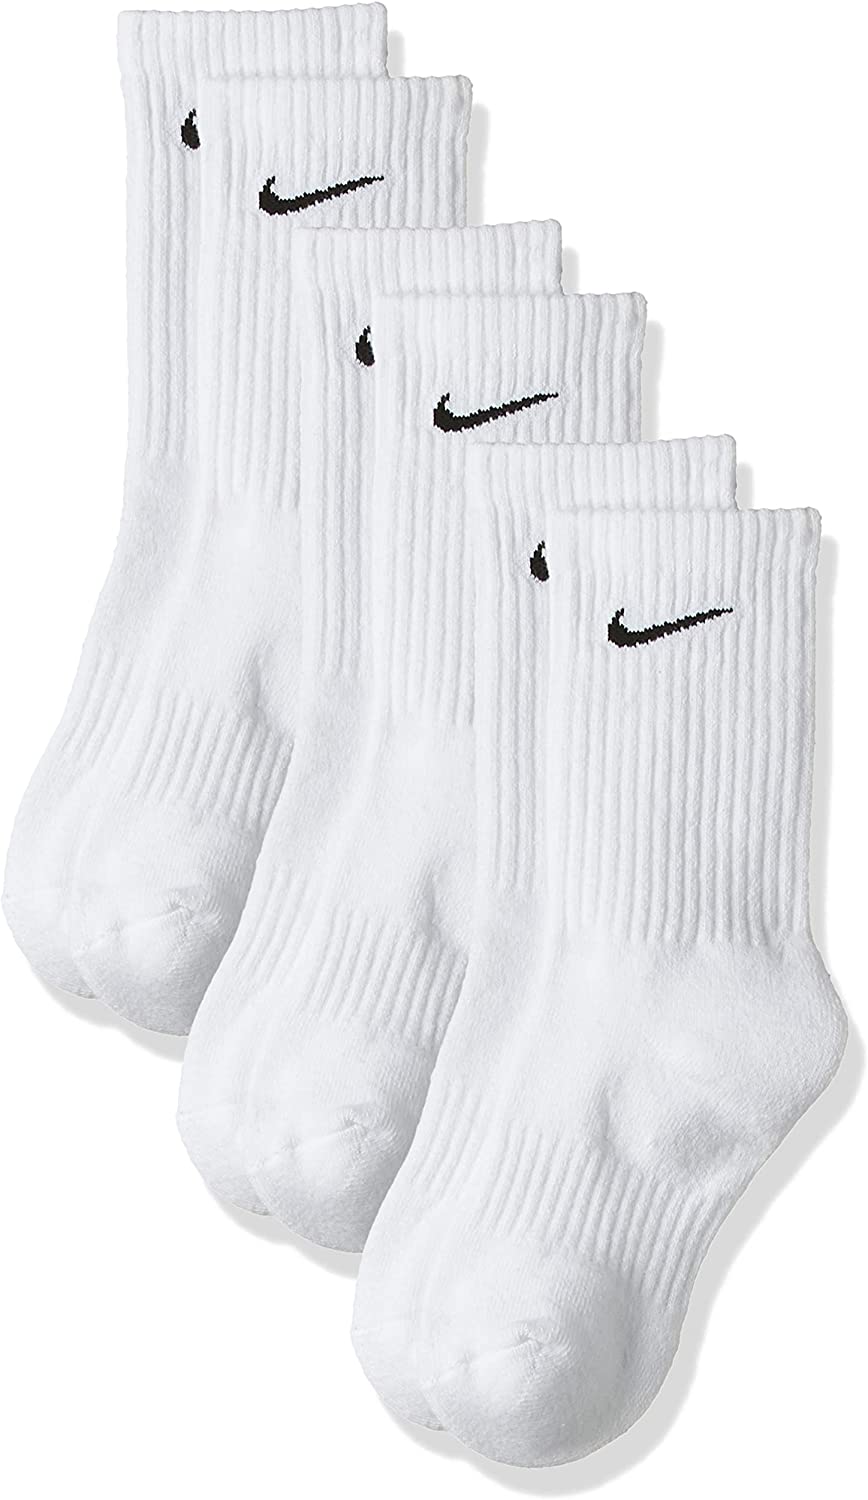 Nike Machine Washable Cotton Socks, 3-Pair